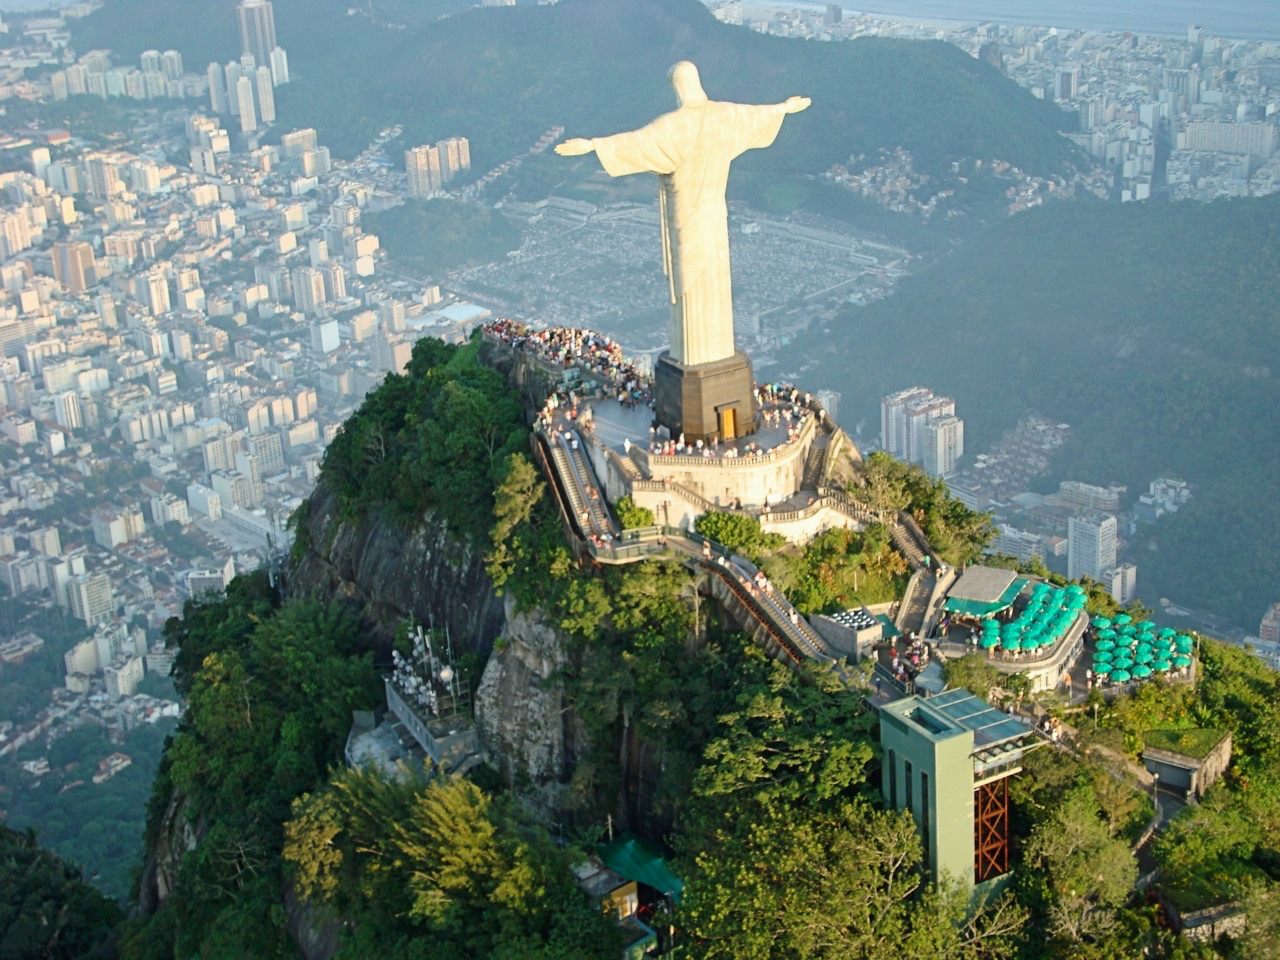 Massive statue of Christ the Redeemer in Rio